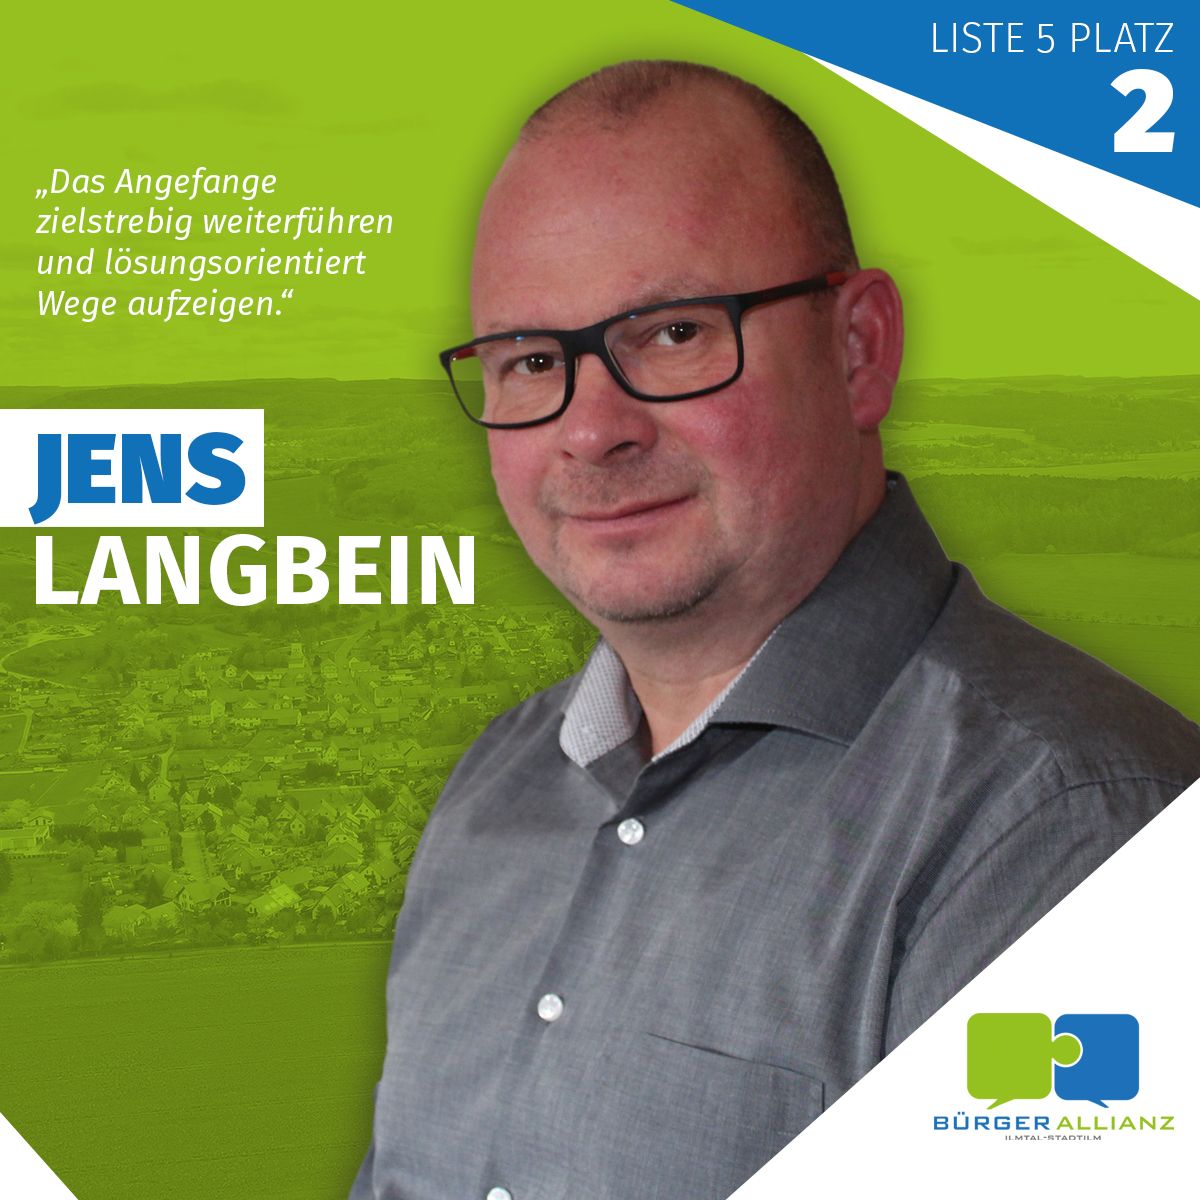 Jens Langbein